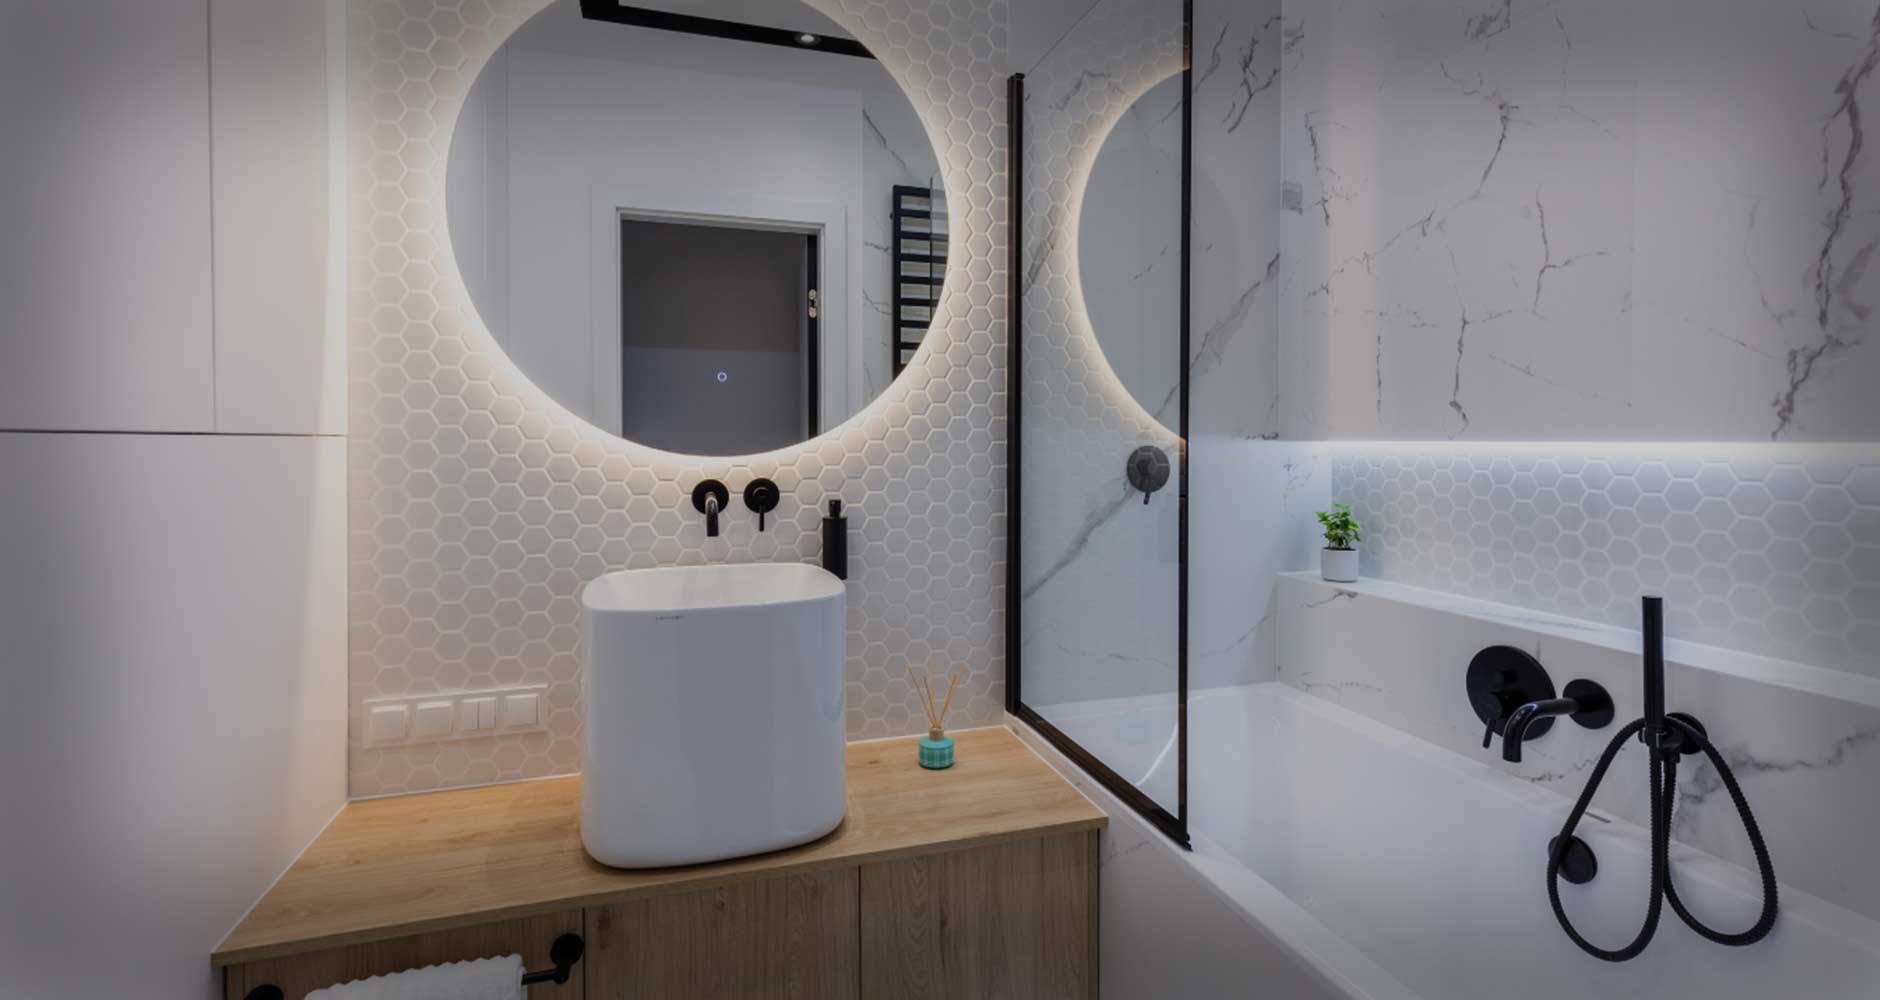 Bathroom and Kitchen Renovations Brisbane